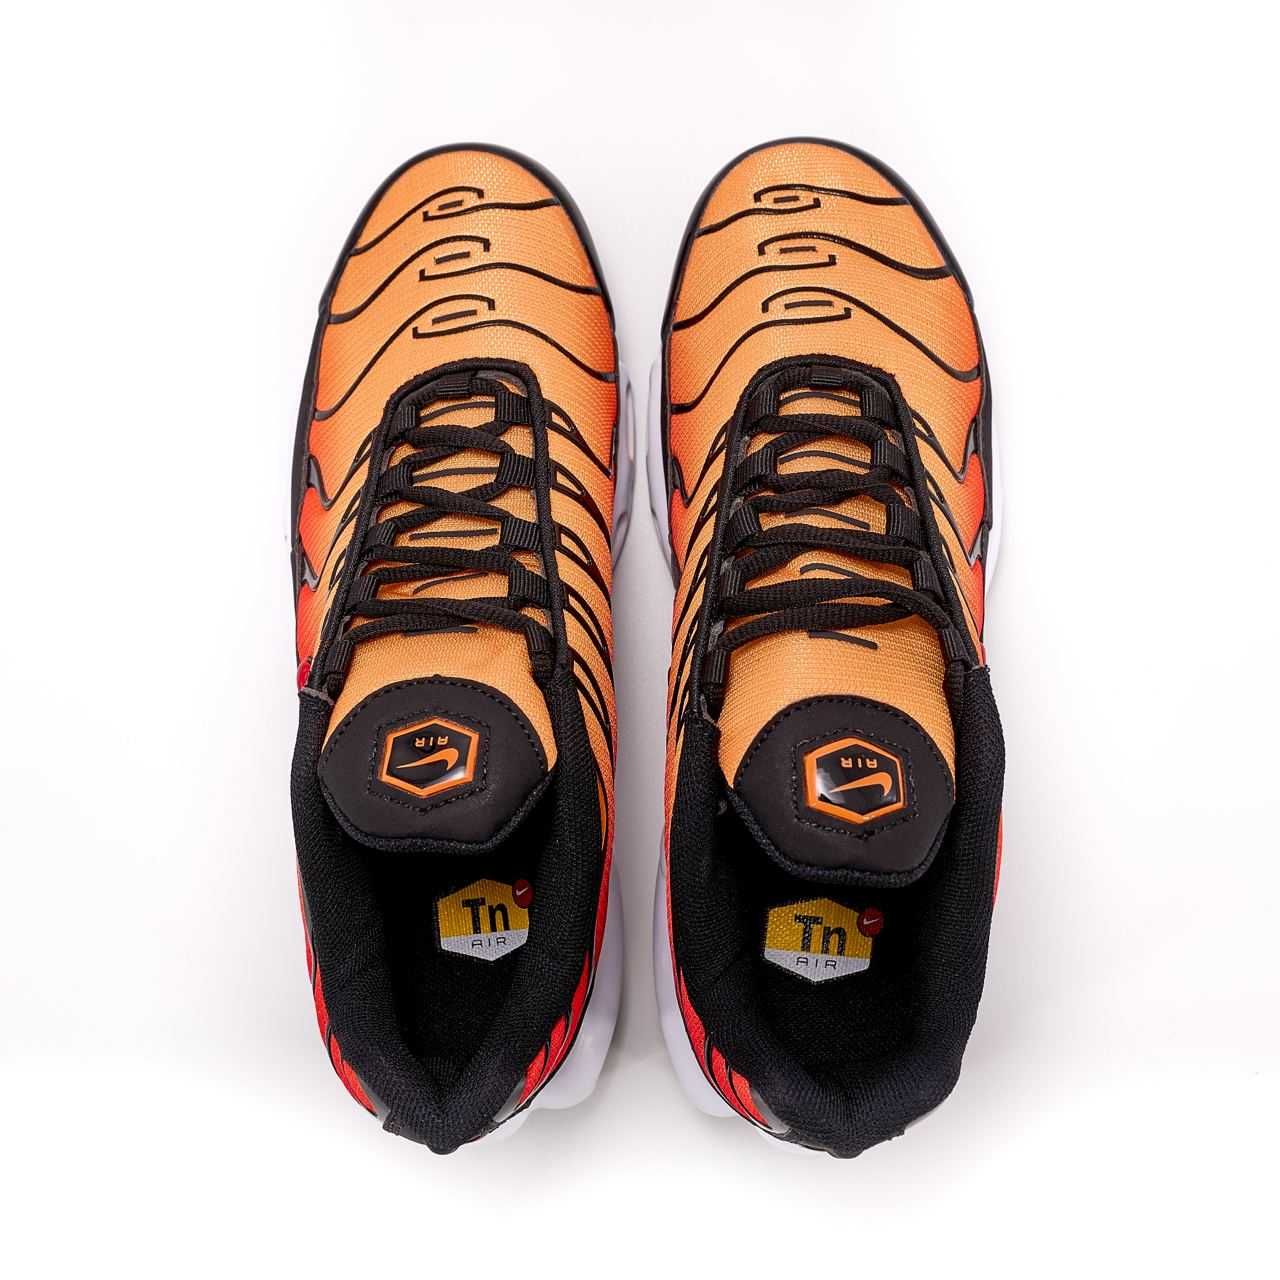 Nike Air Max TN Plus Black/Orange